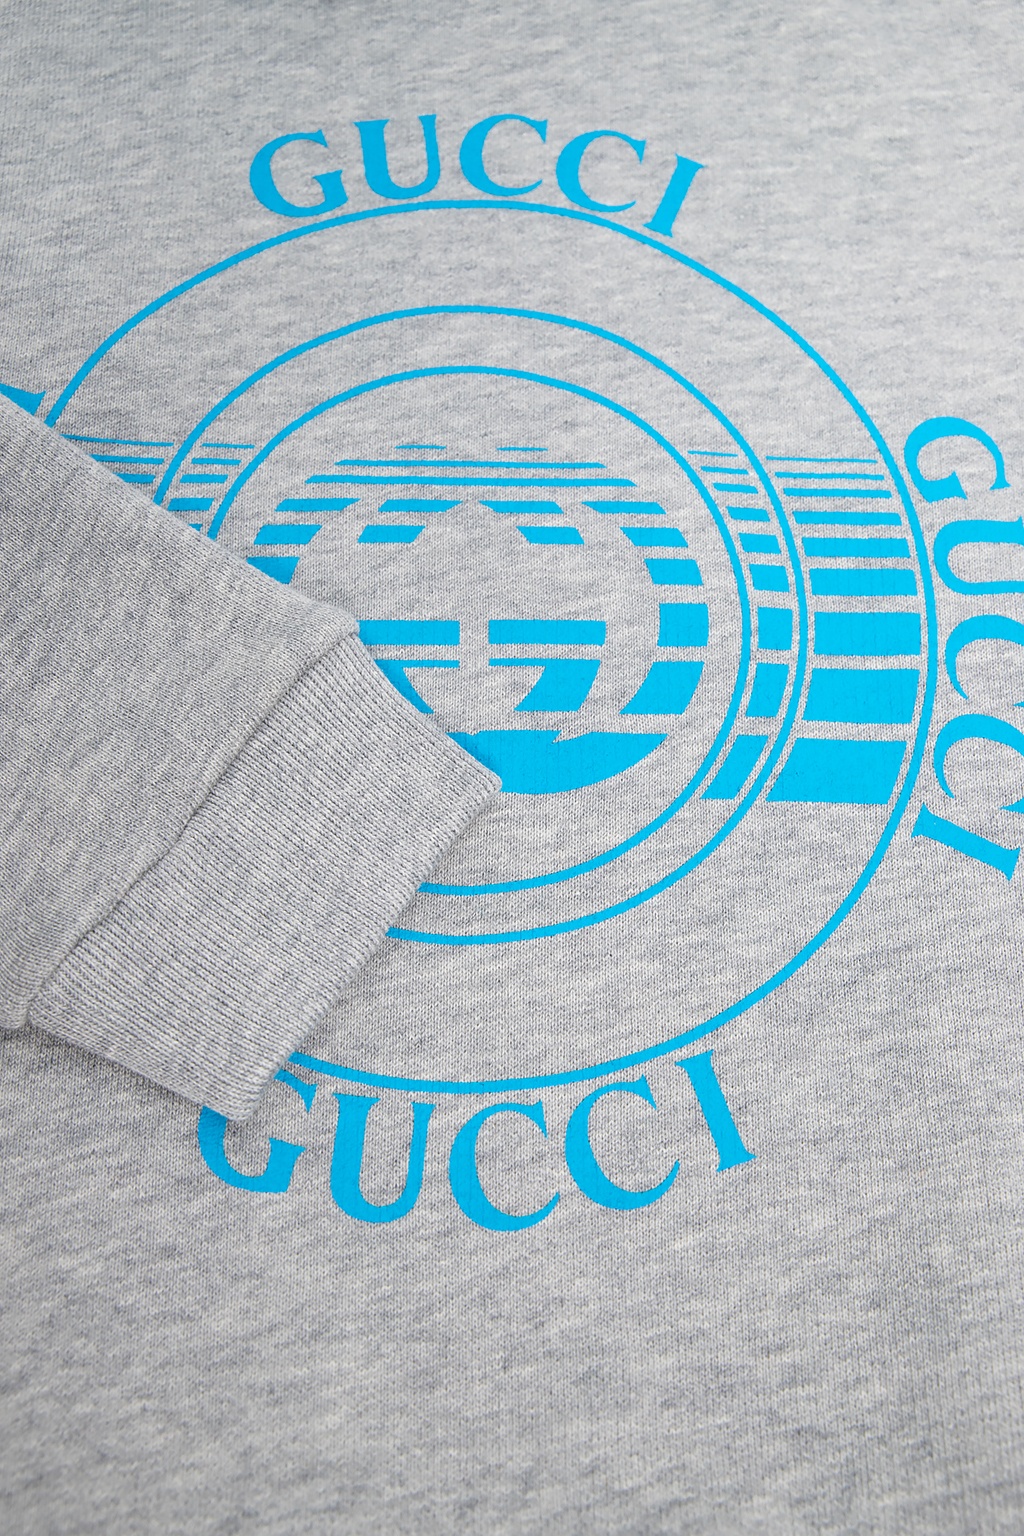 gucci oversized Kids Branded hoodie